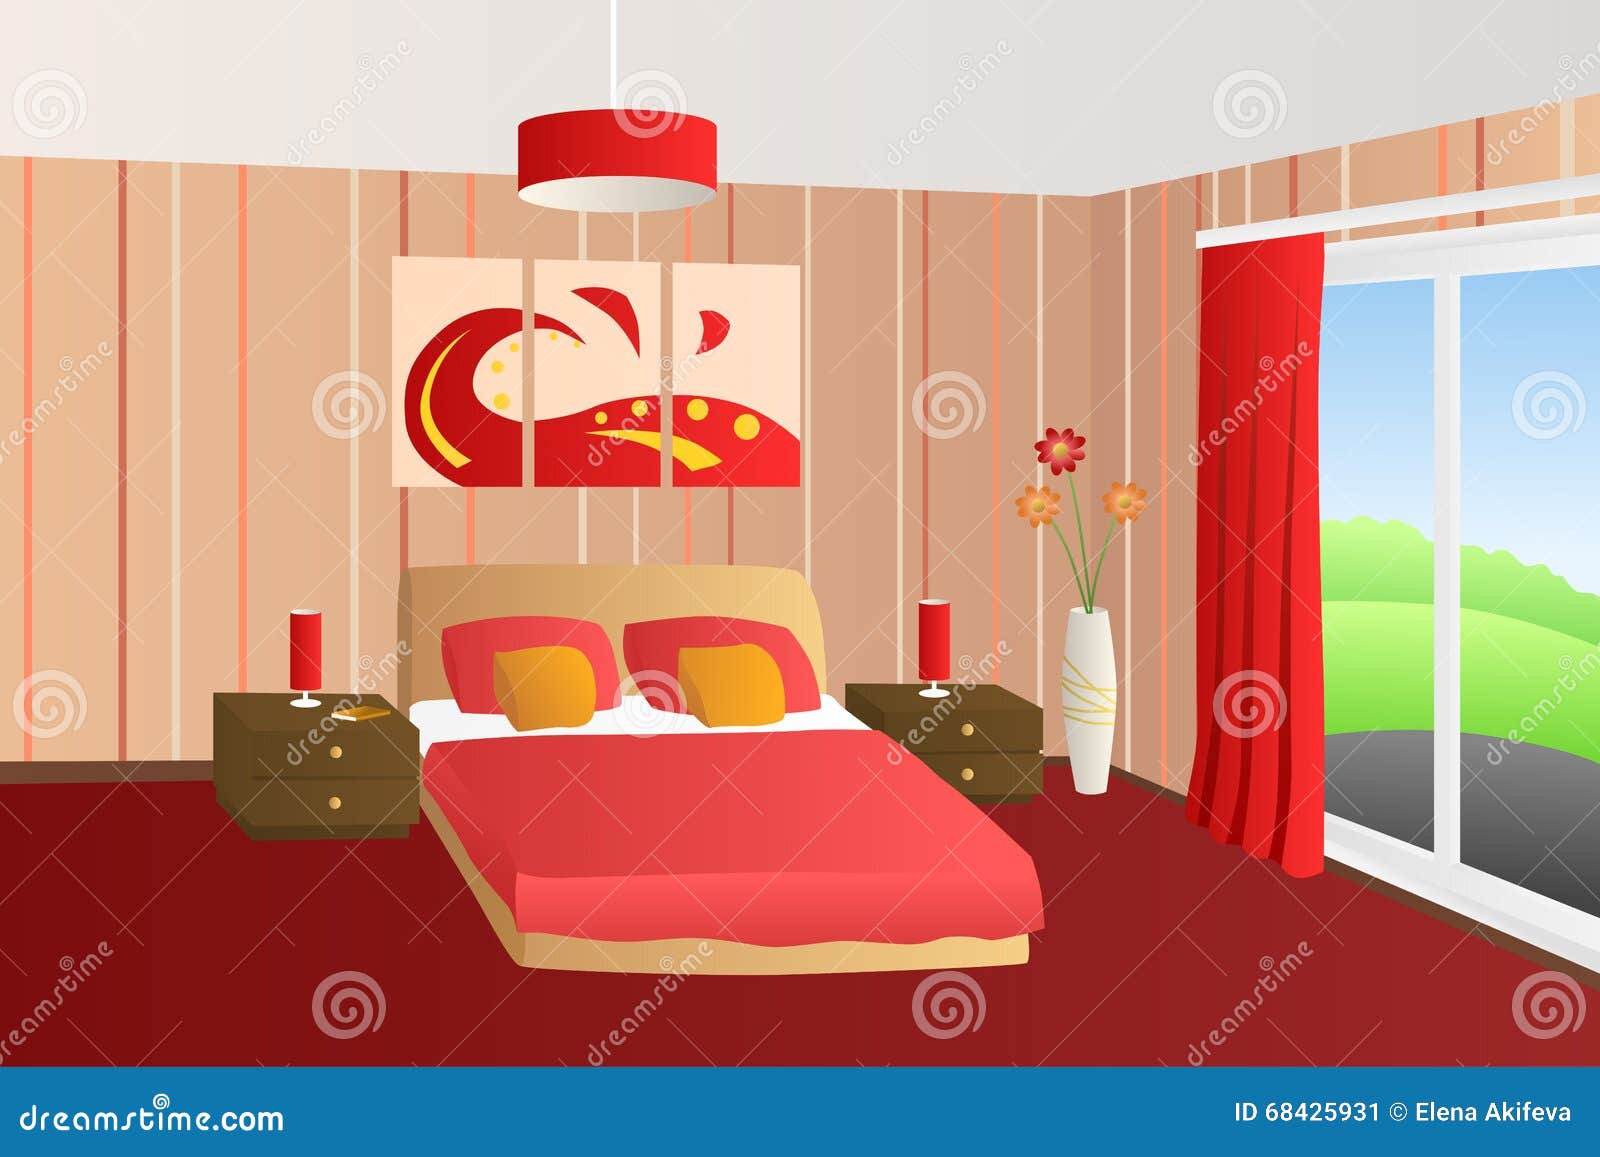 Interior Design  Modern Bedroom  Banner  Vector Illustration 